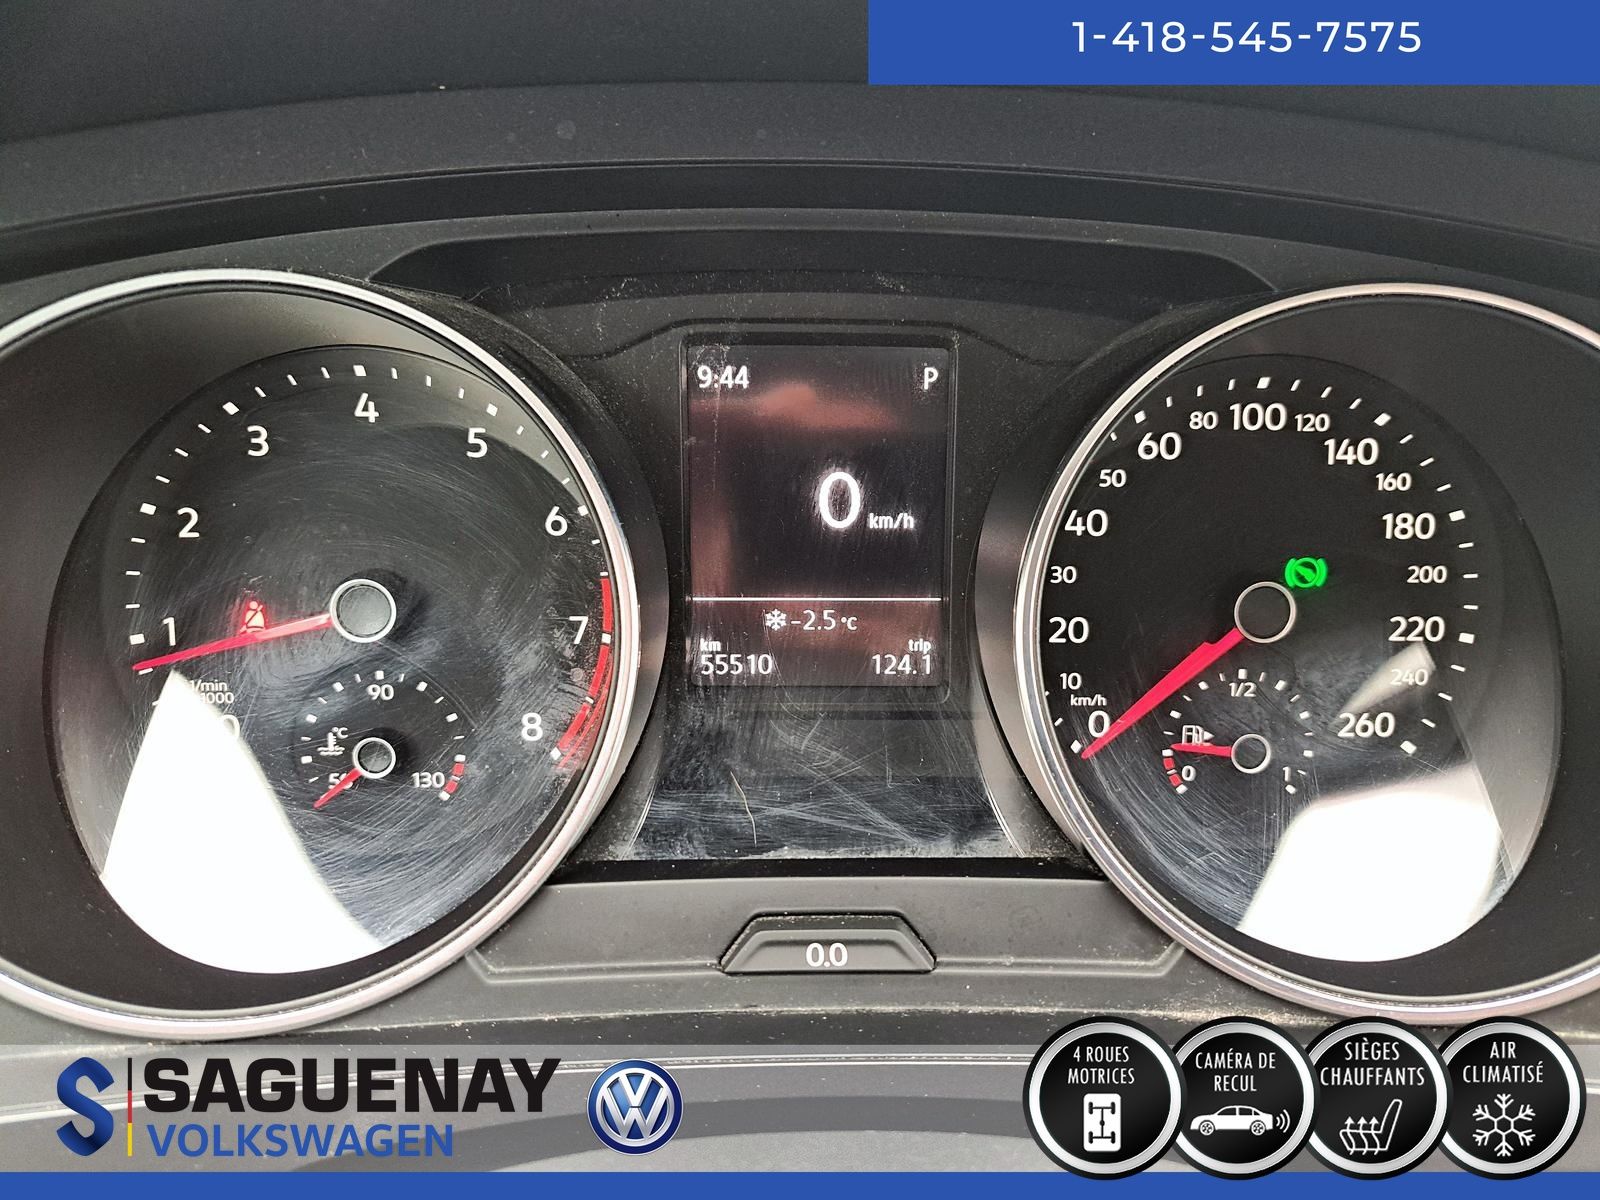 Volkswagen Tiguan Trendline 4 MOTION  (100$/Sem)* 2019 STOCK : GS172A